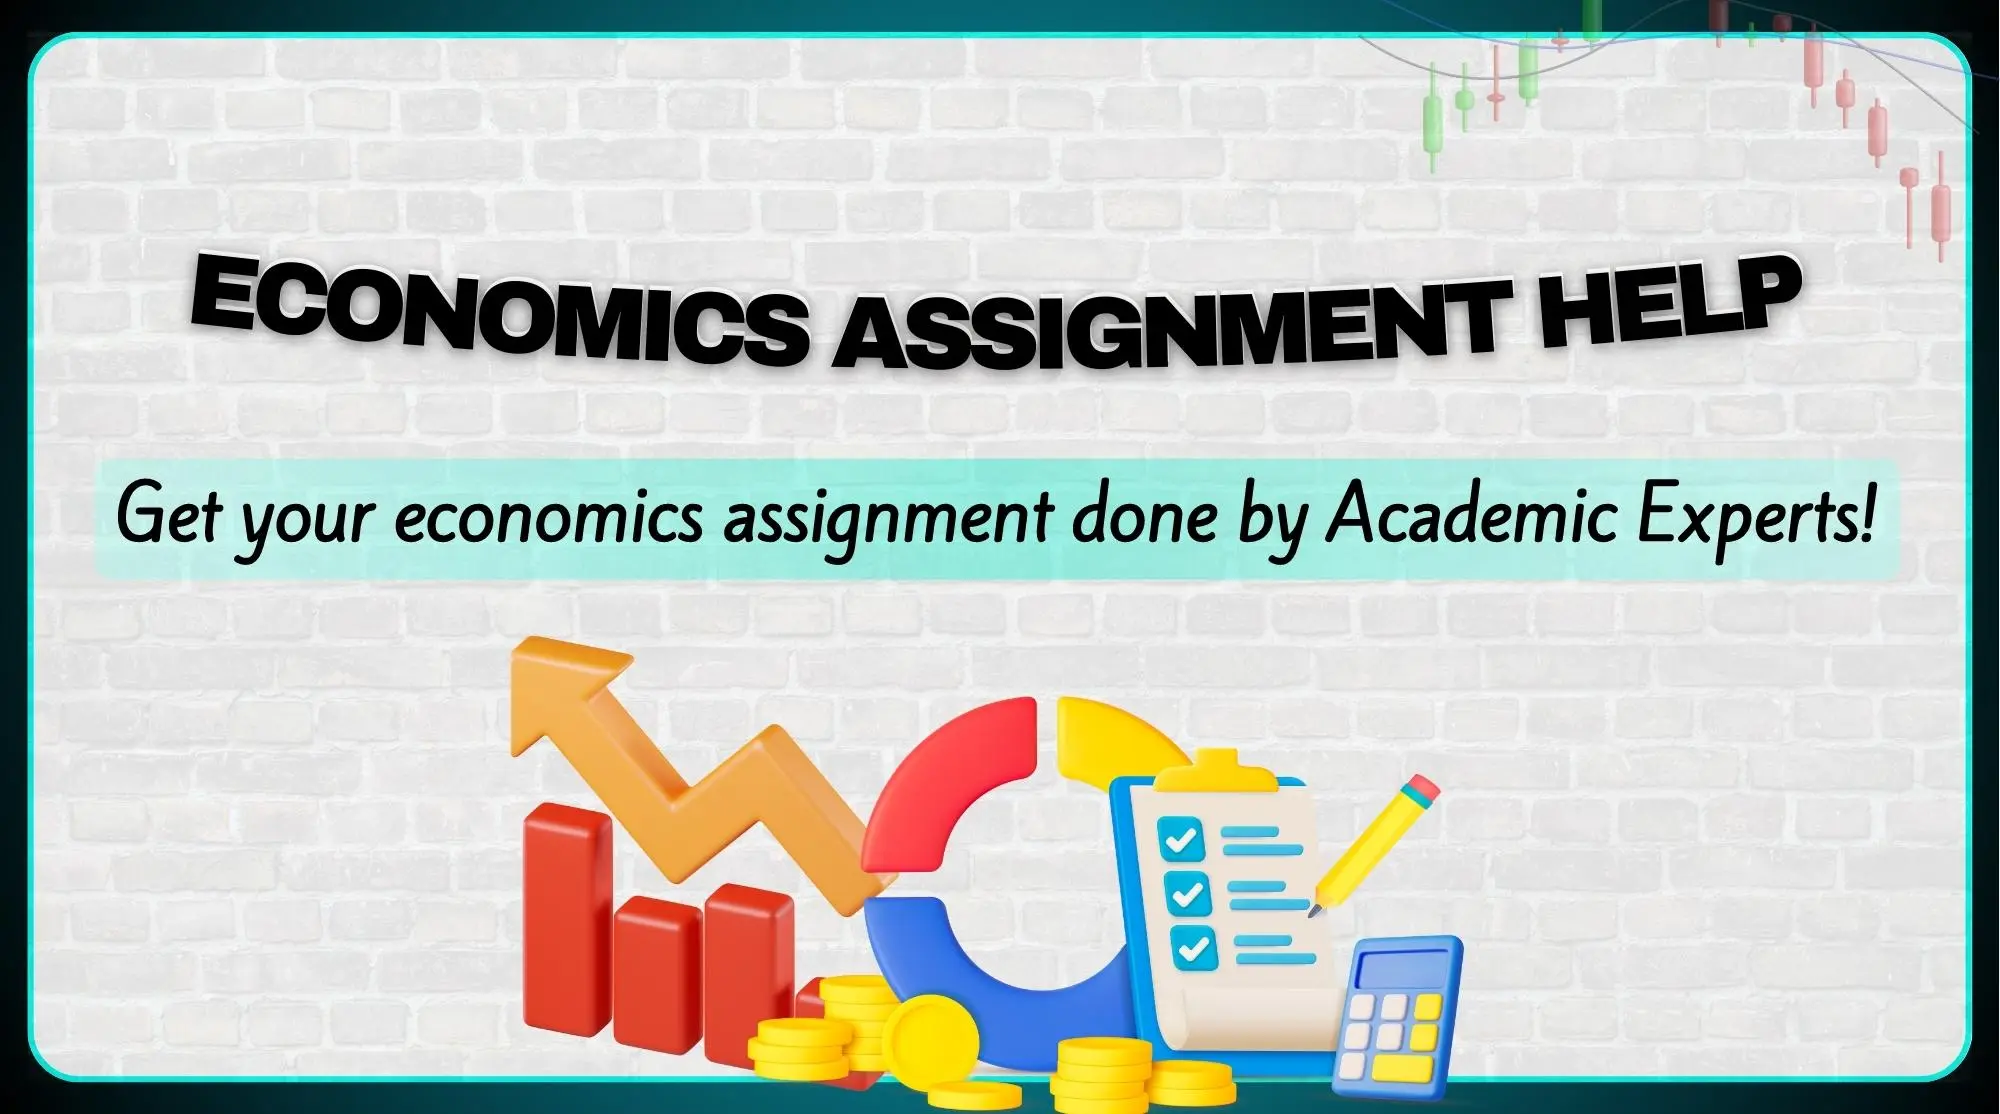 Economics Assignment Help Online - Get Help from Academic Experts